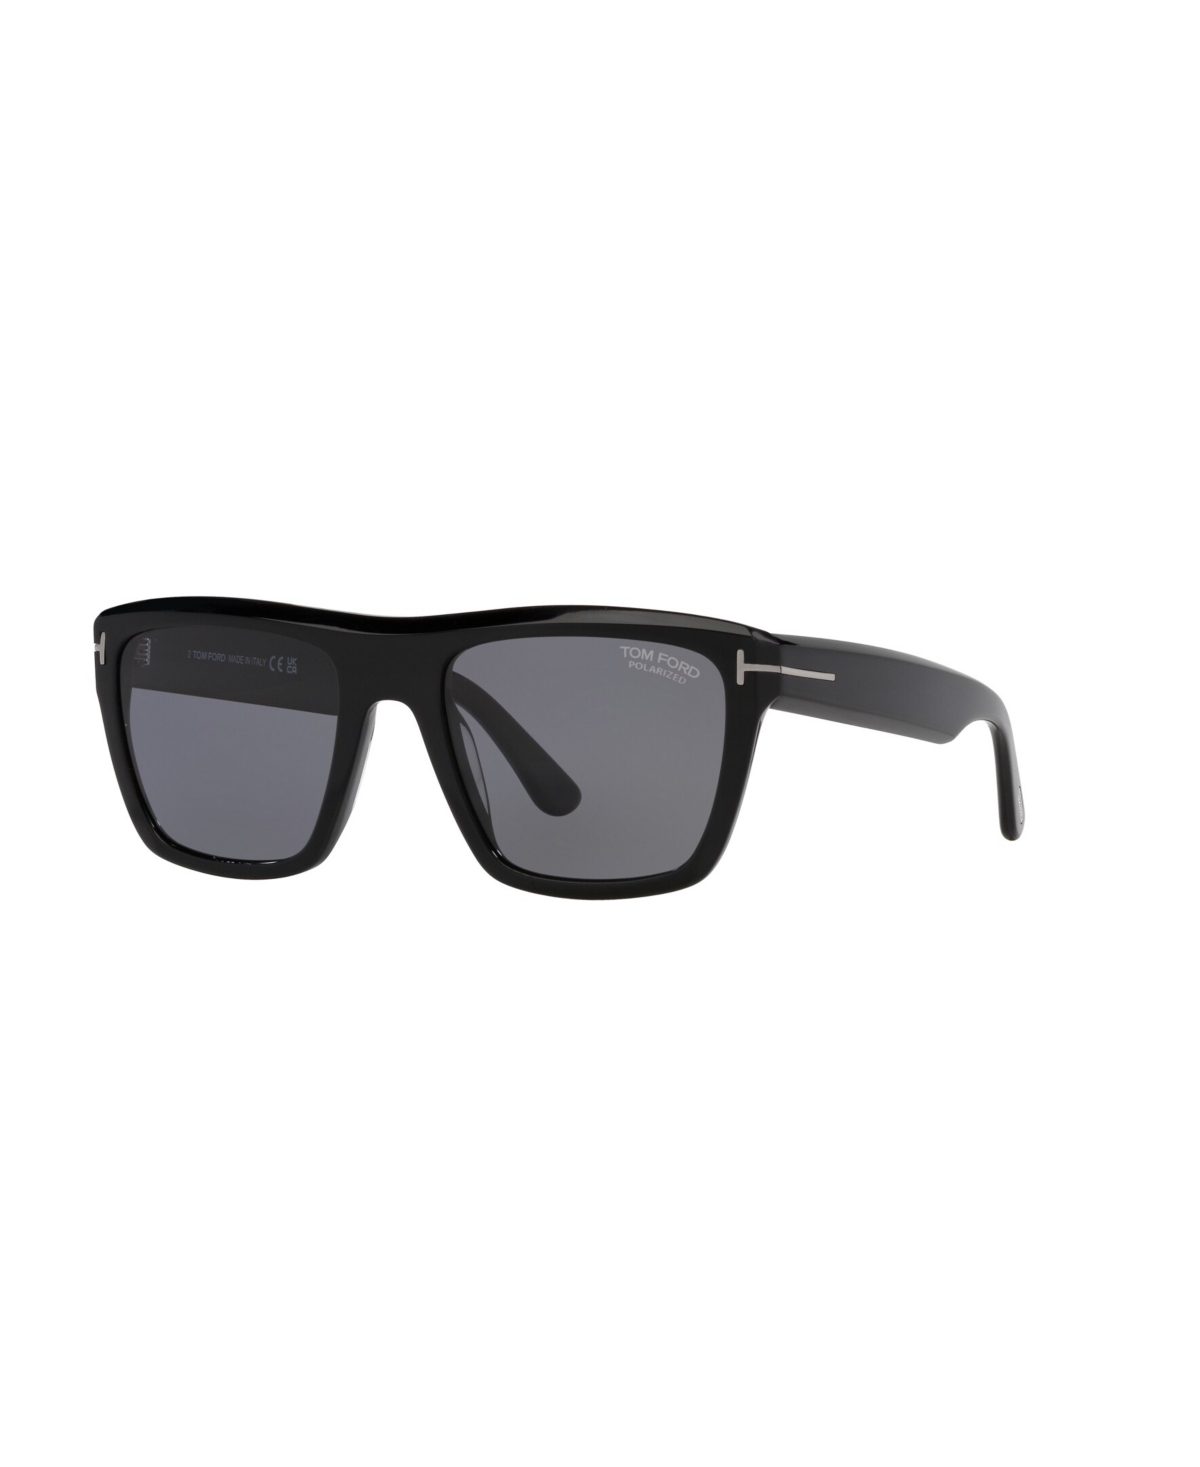 Men's Polarized Sunglasses, Alberto - Black Shiny